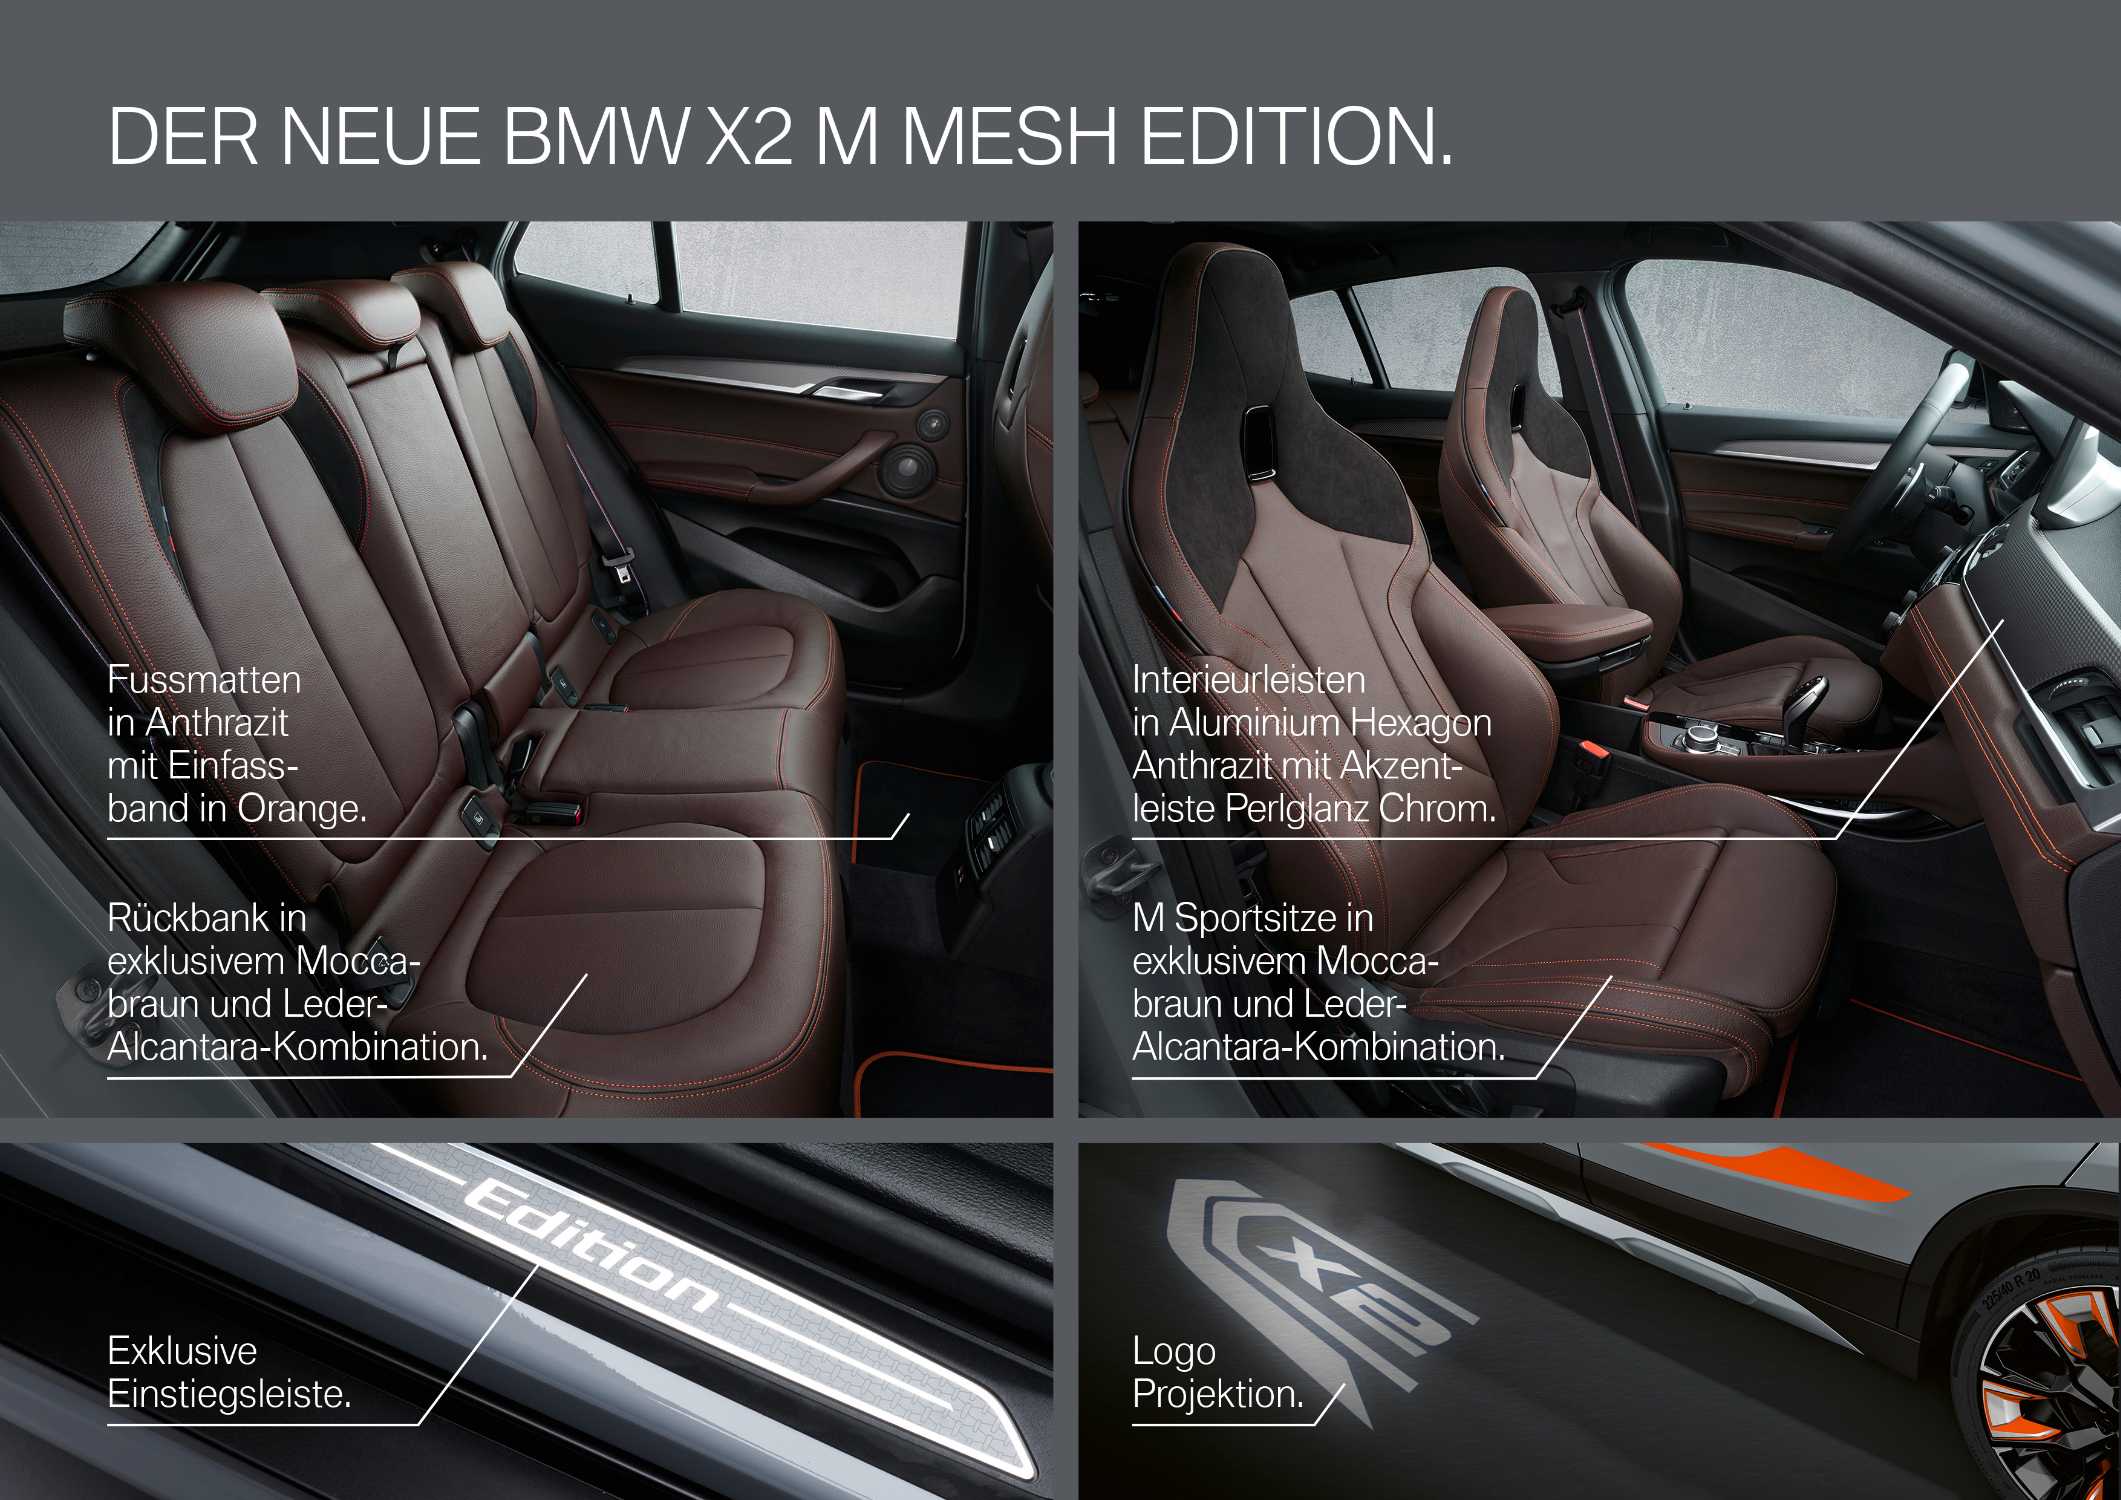 The new BMW X2 xDrive20i M Mesh Edition (09/2020).